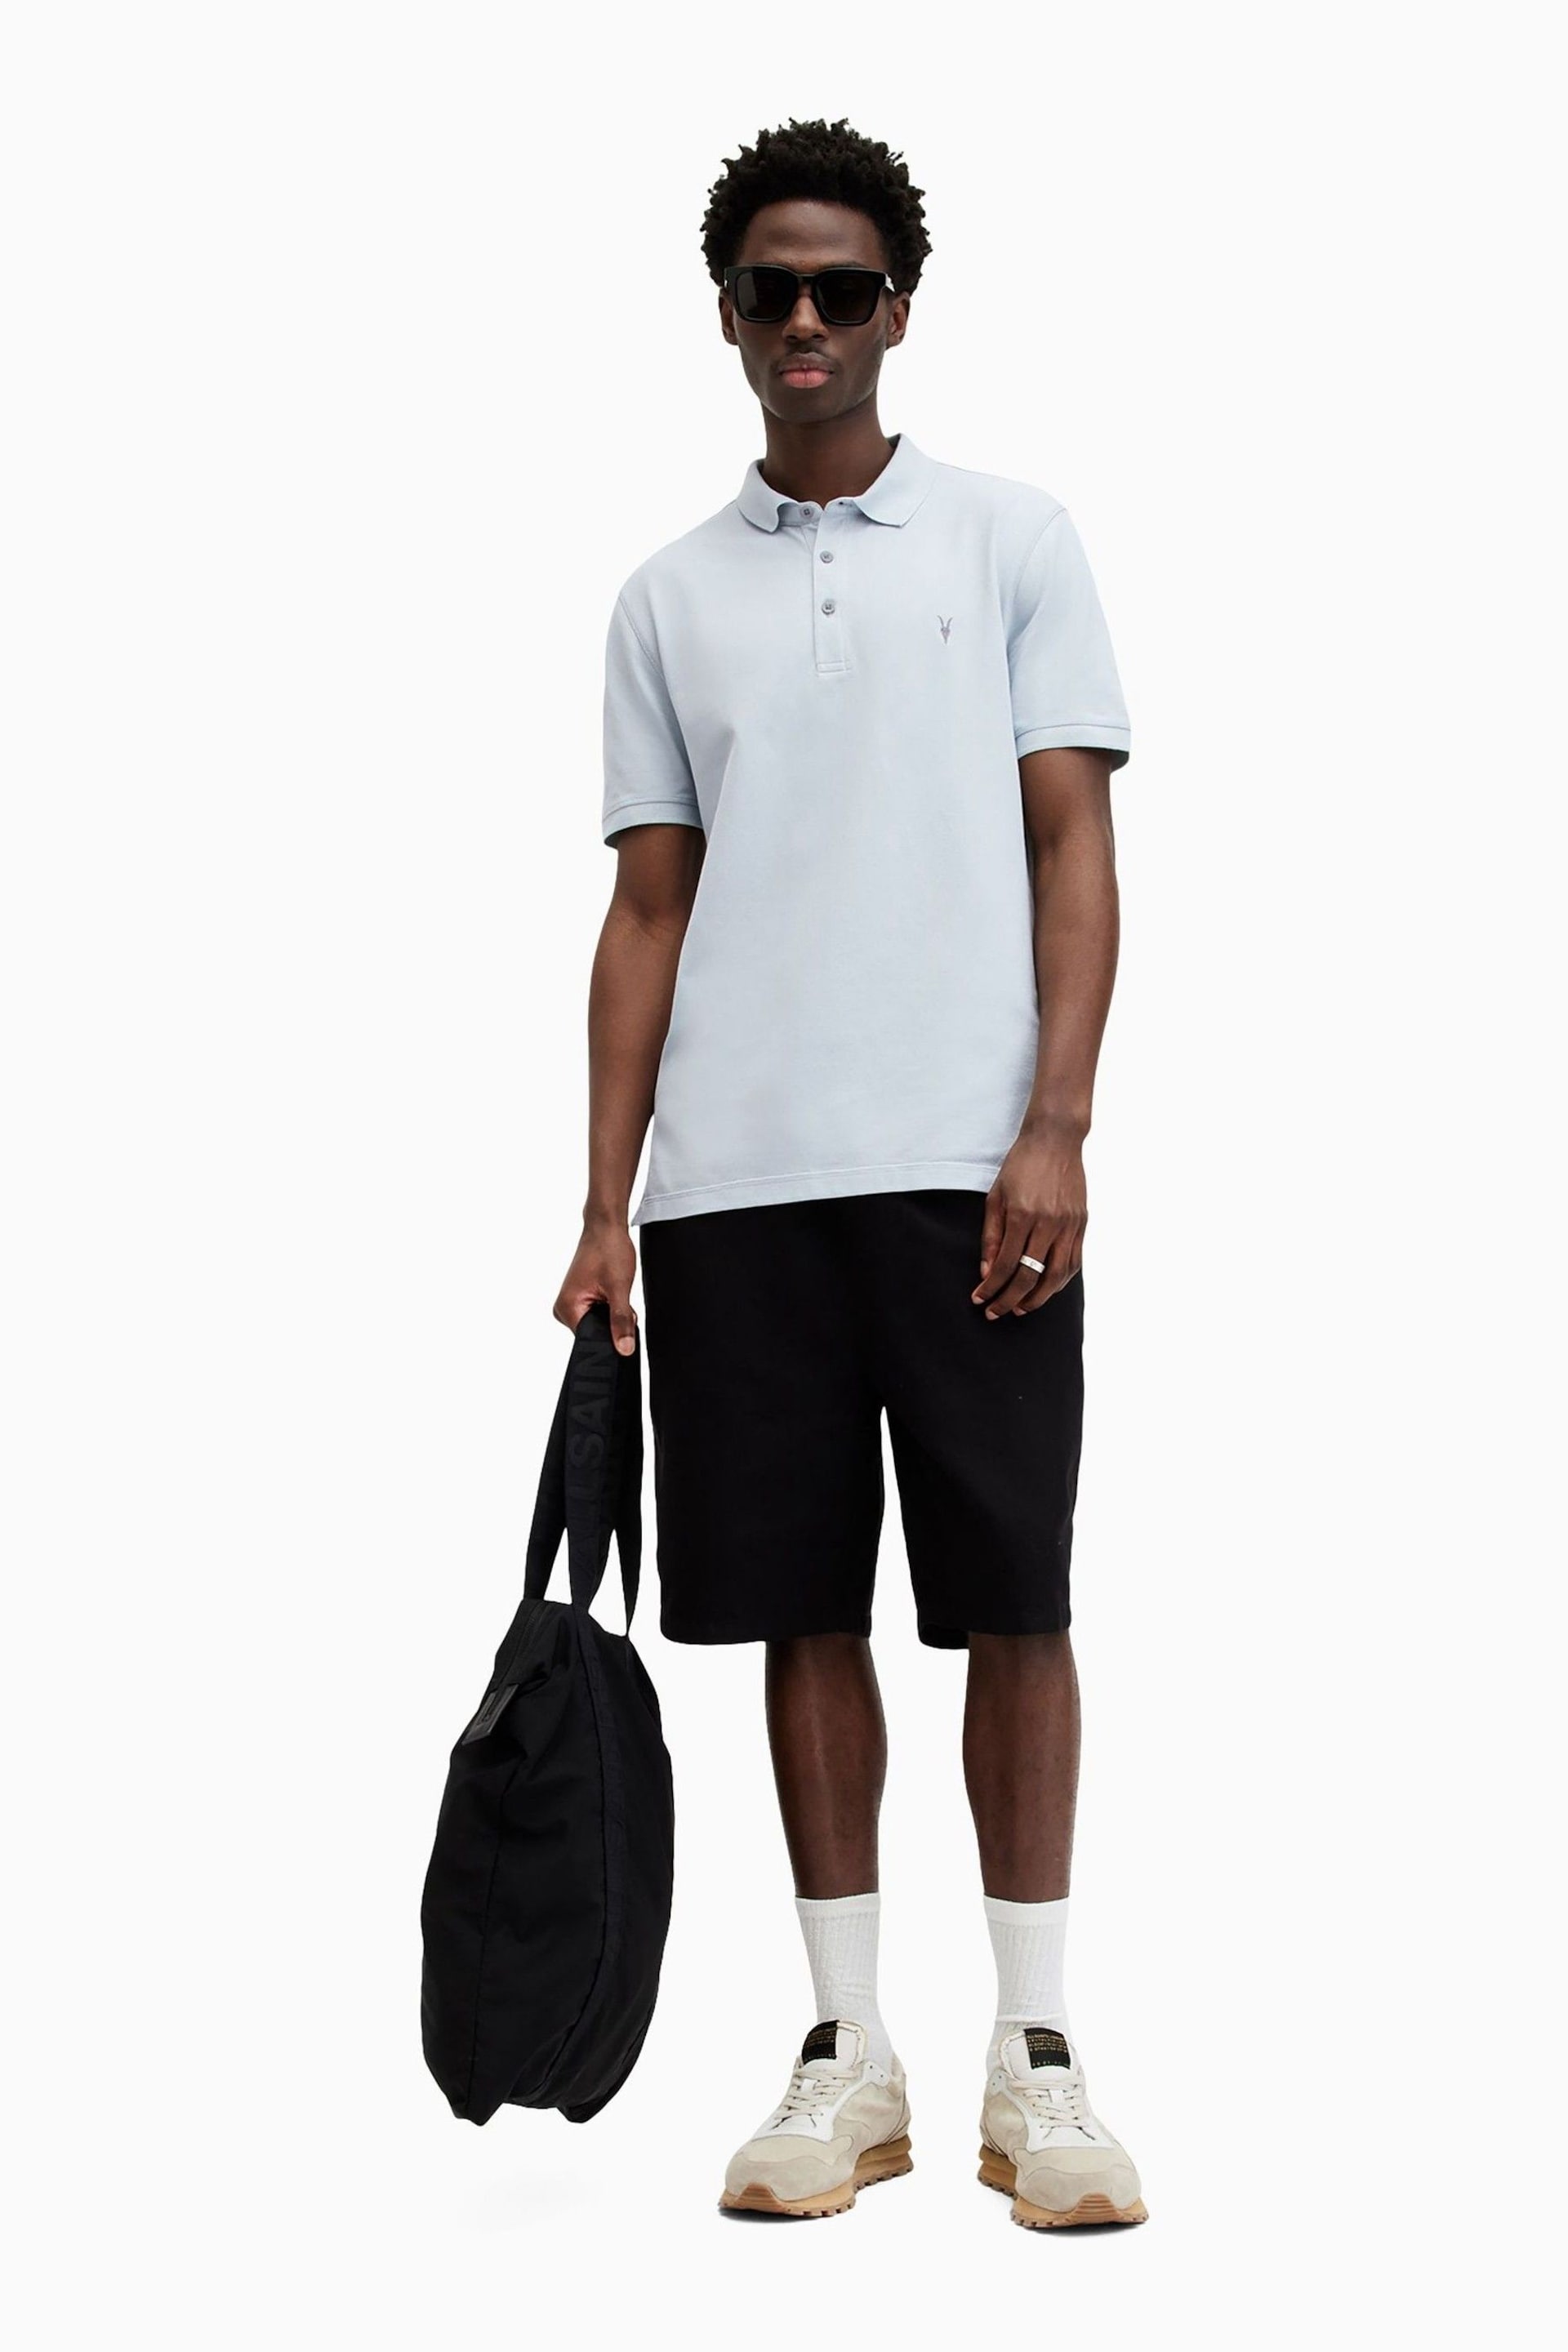 AllSaints Black Reform Short Sleeve Polo Shirt 2 Pack - Image 5 of 7